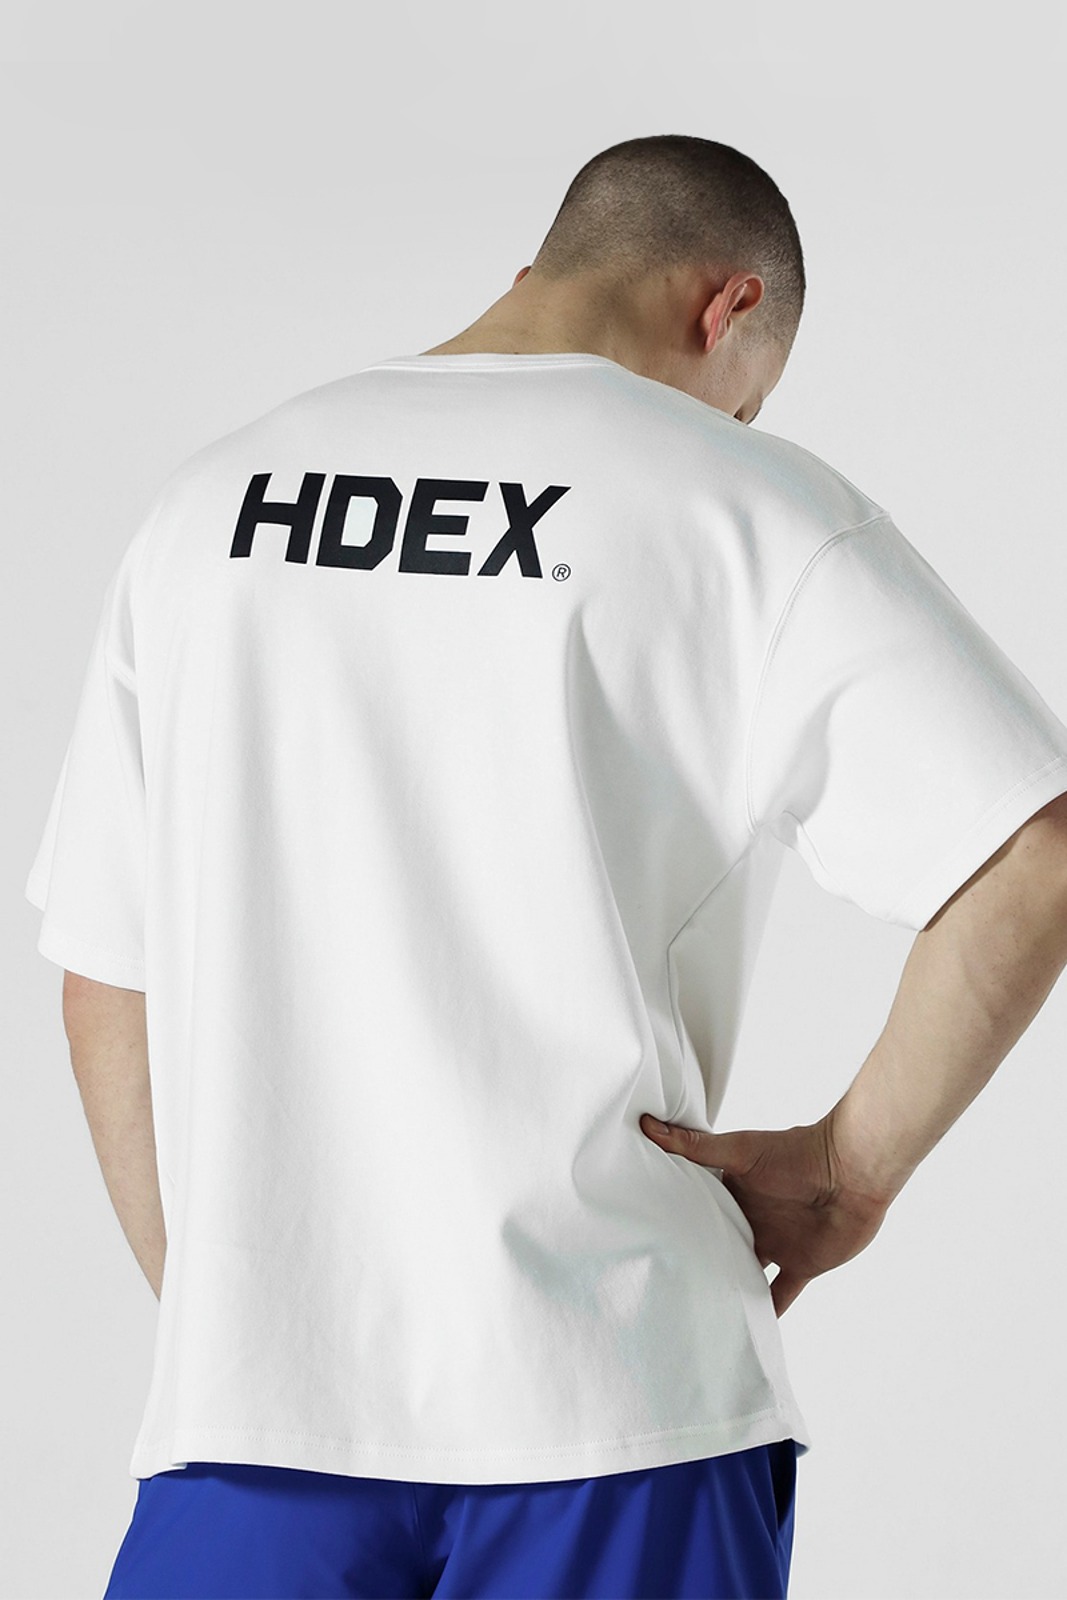 HDEX, 메인 백로고 오버핏 반팔티 4 color